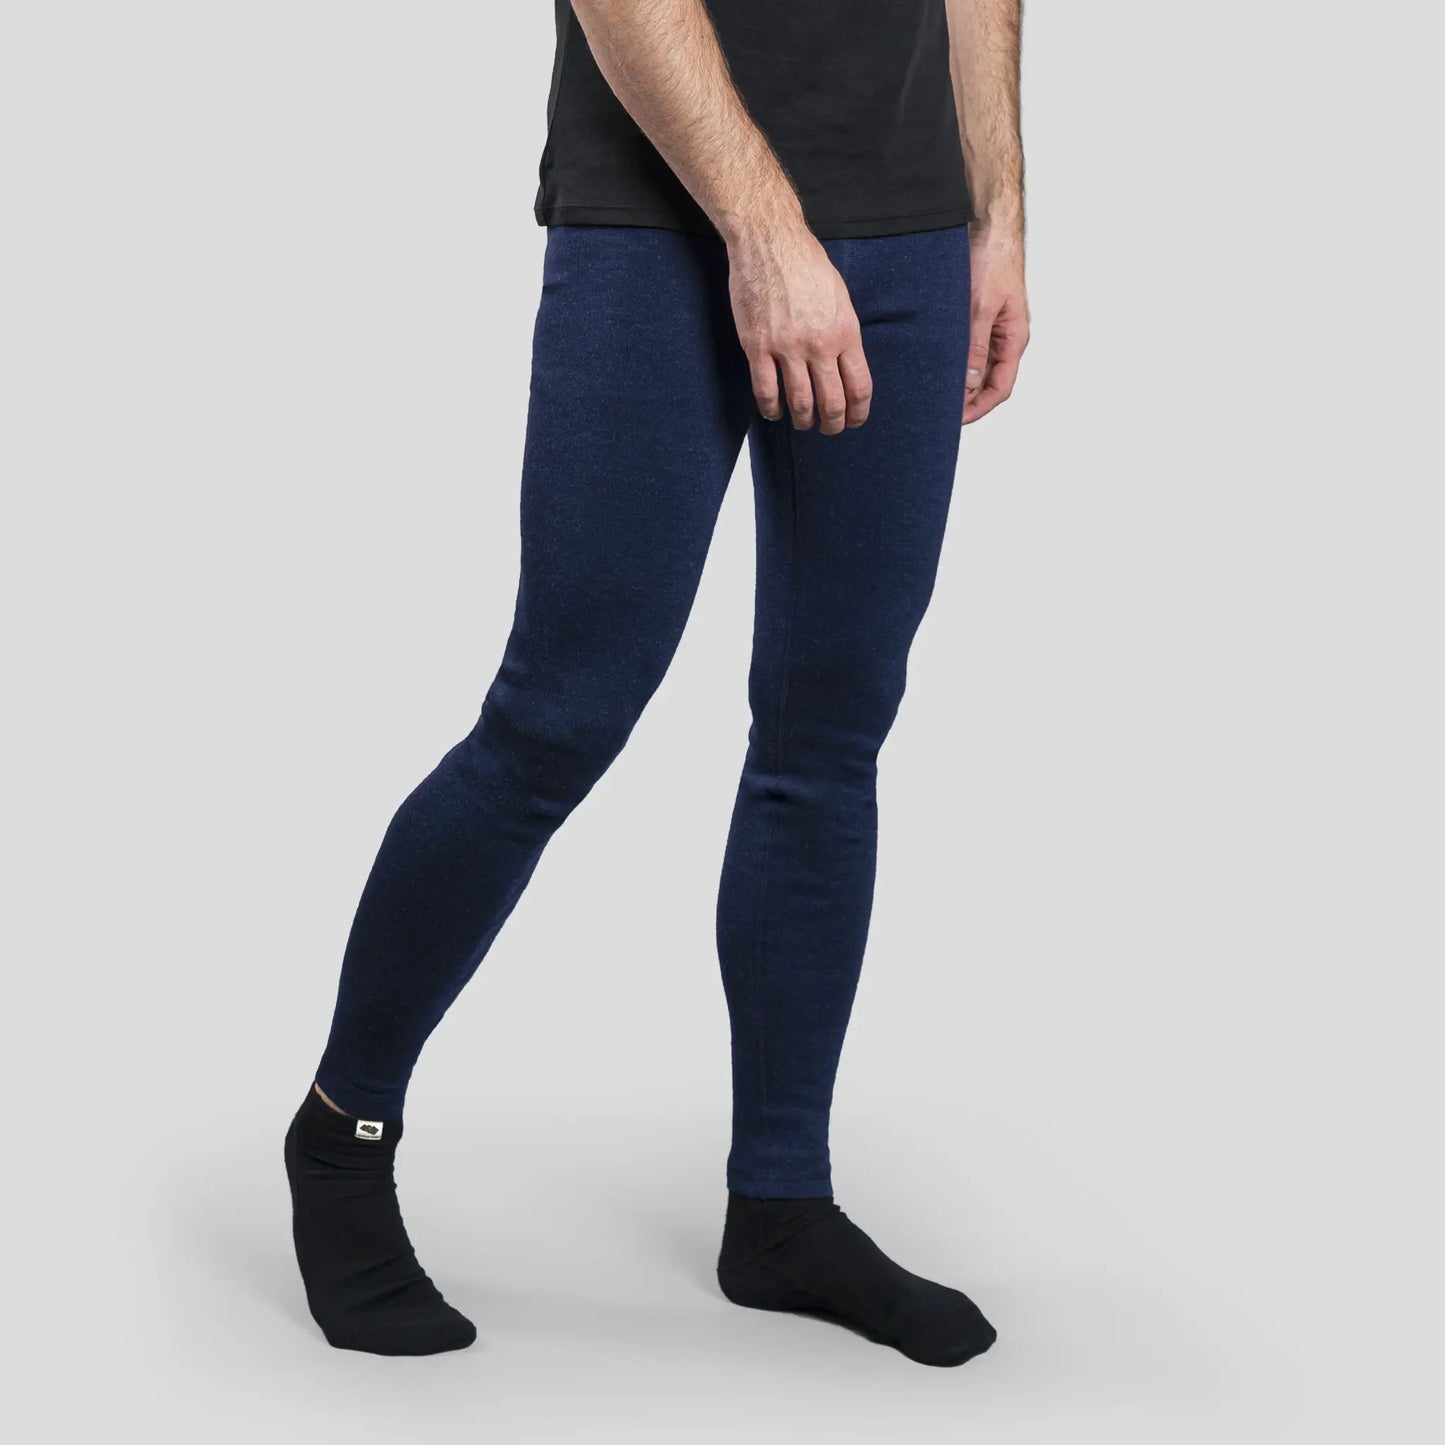 mens low impact dye leggings midweight color navy blue